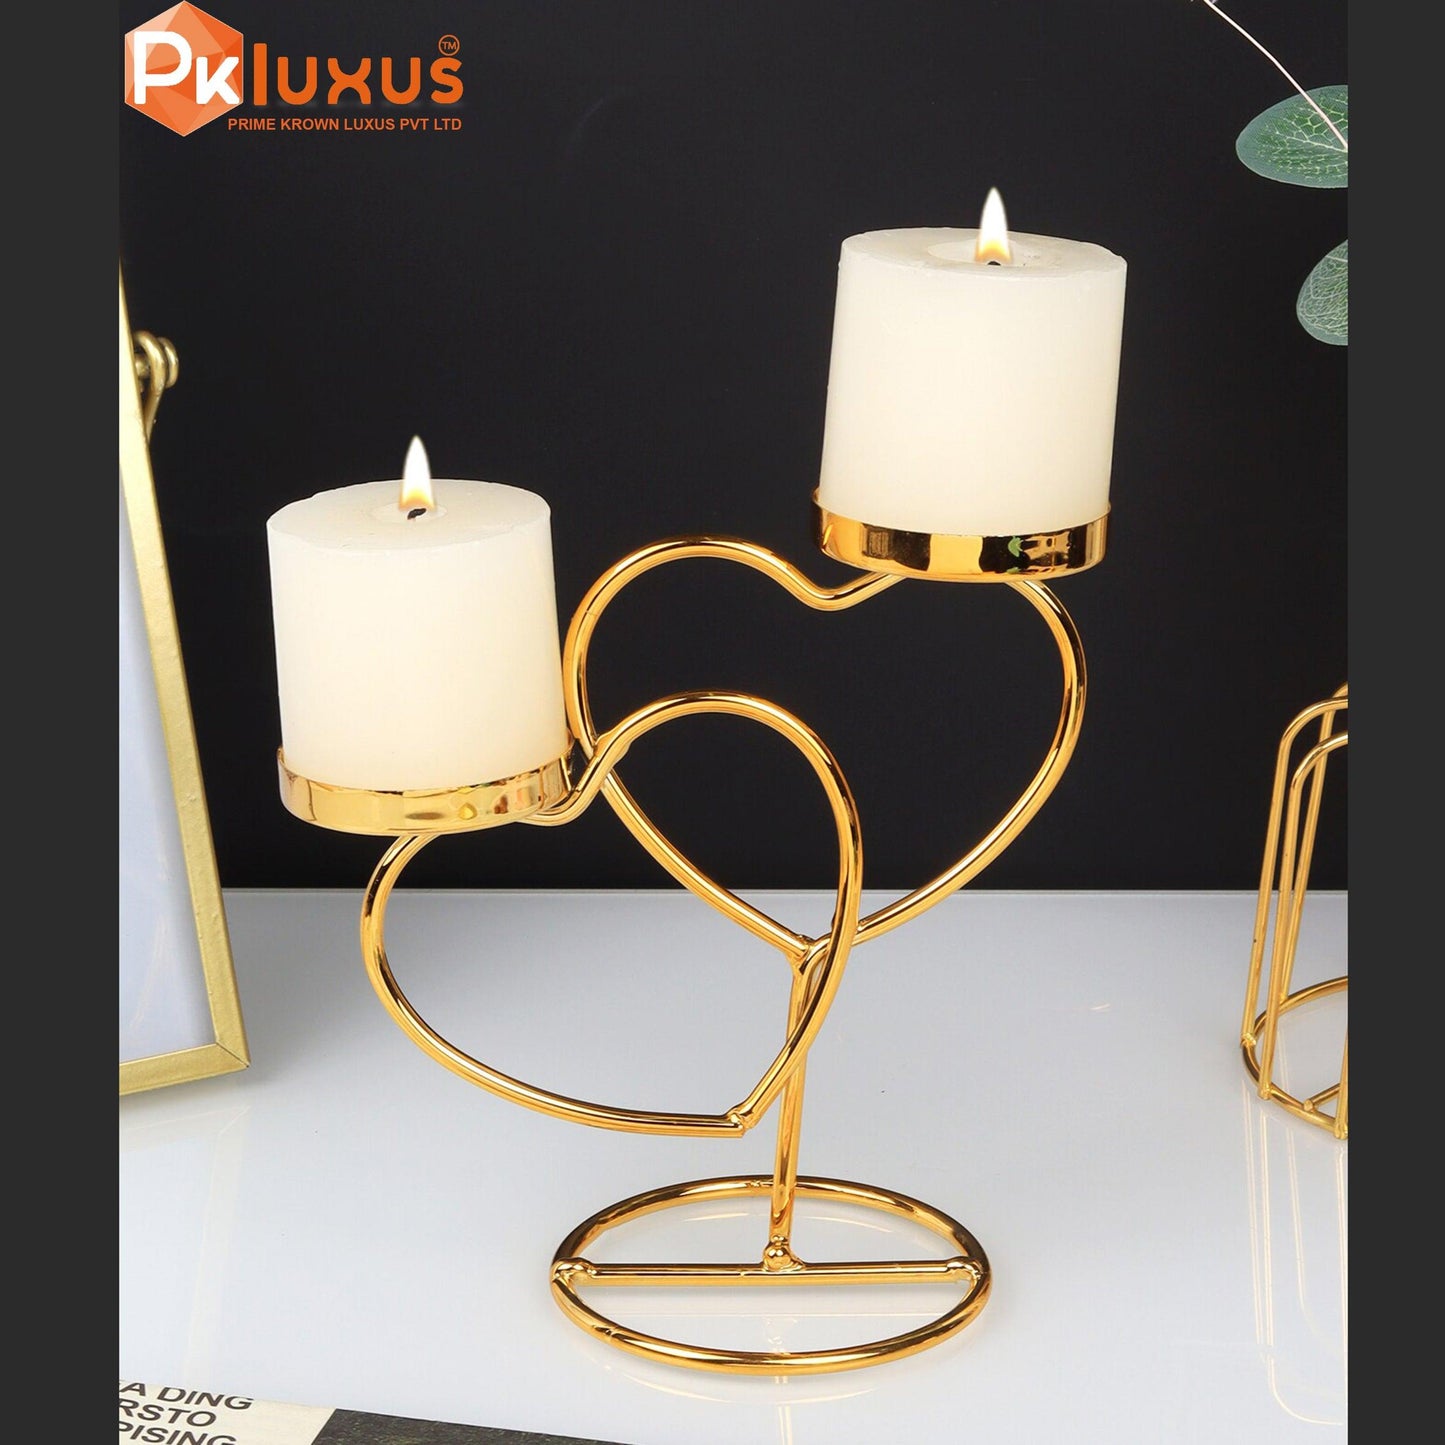 Golden Candlestick Home Decoration In Romantic Way | PK LUXUS™ - PK LUXUS